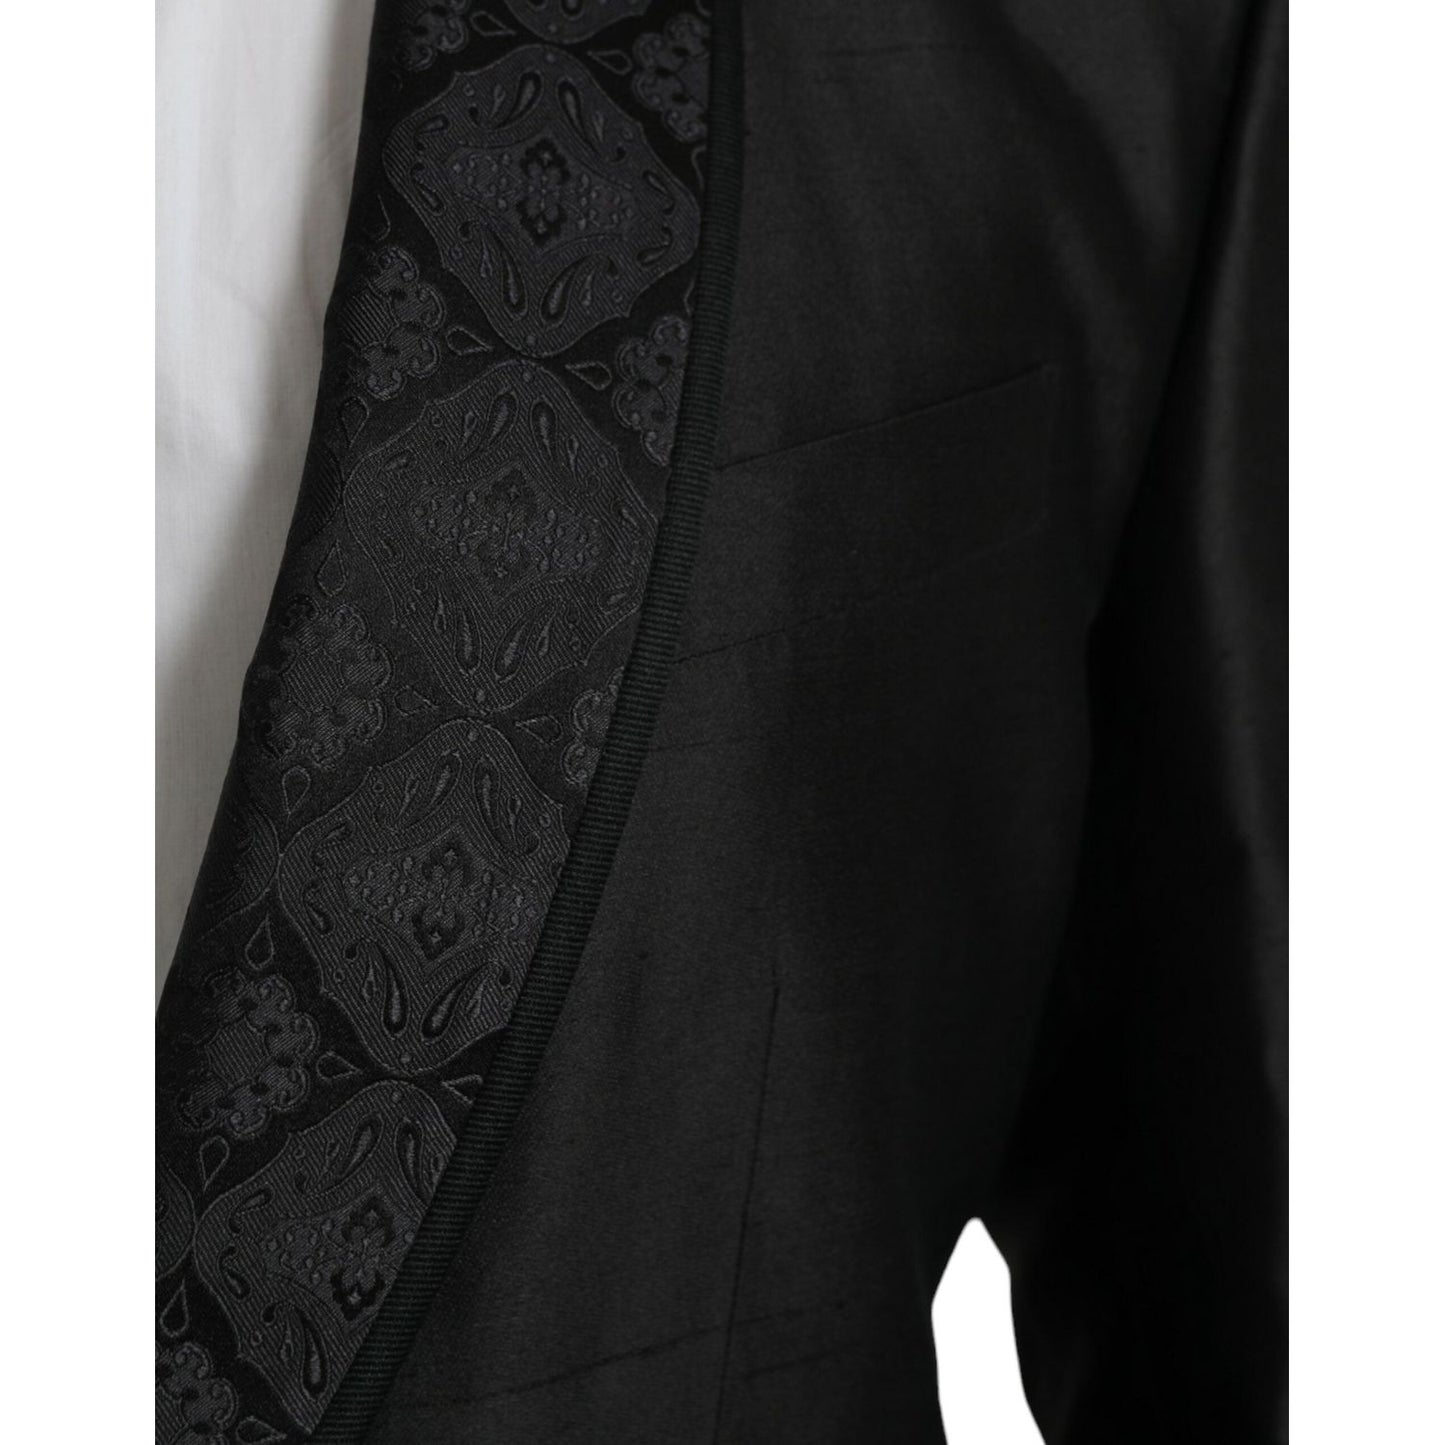 Dolce & Gabbana Black MARTINI Single Breasted Coat Blazer black-martini-single-breasted-coat-blazer-1